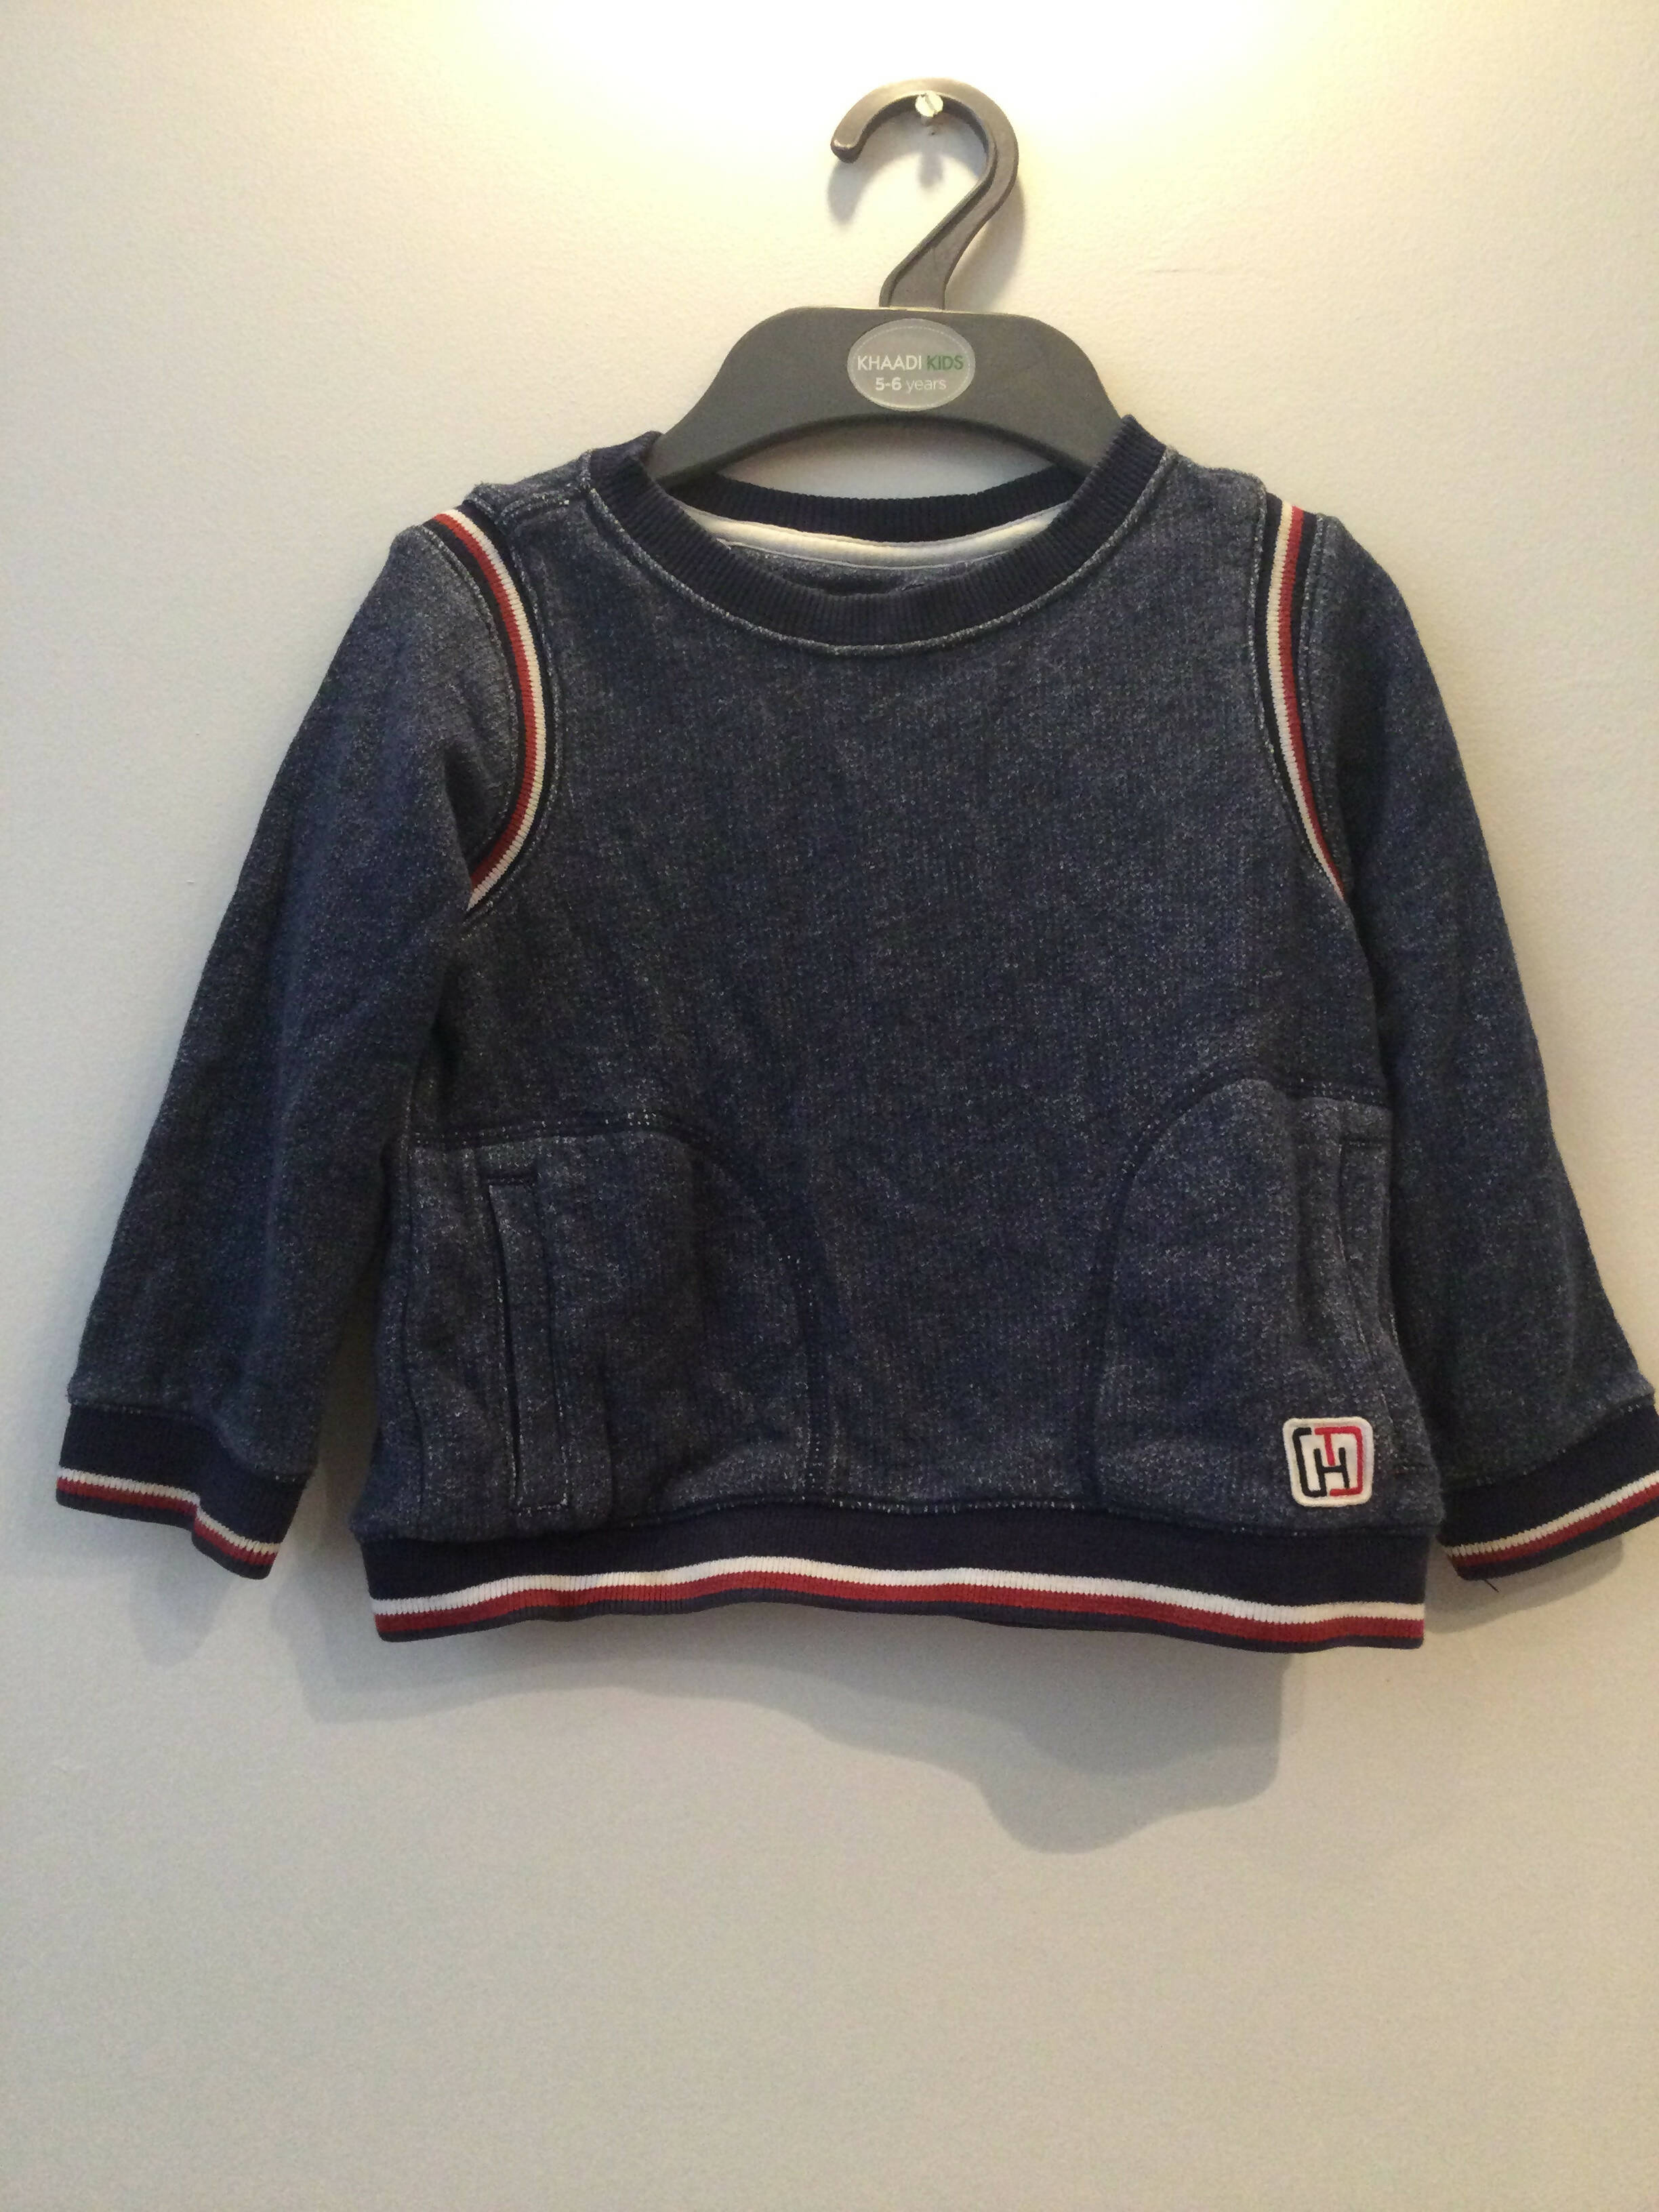 Tommy Hilfiger | Boys sweatshirt | Kids Winter | Size 2T | Preloved